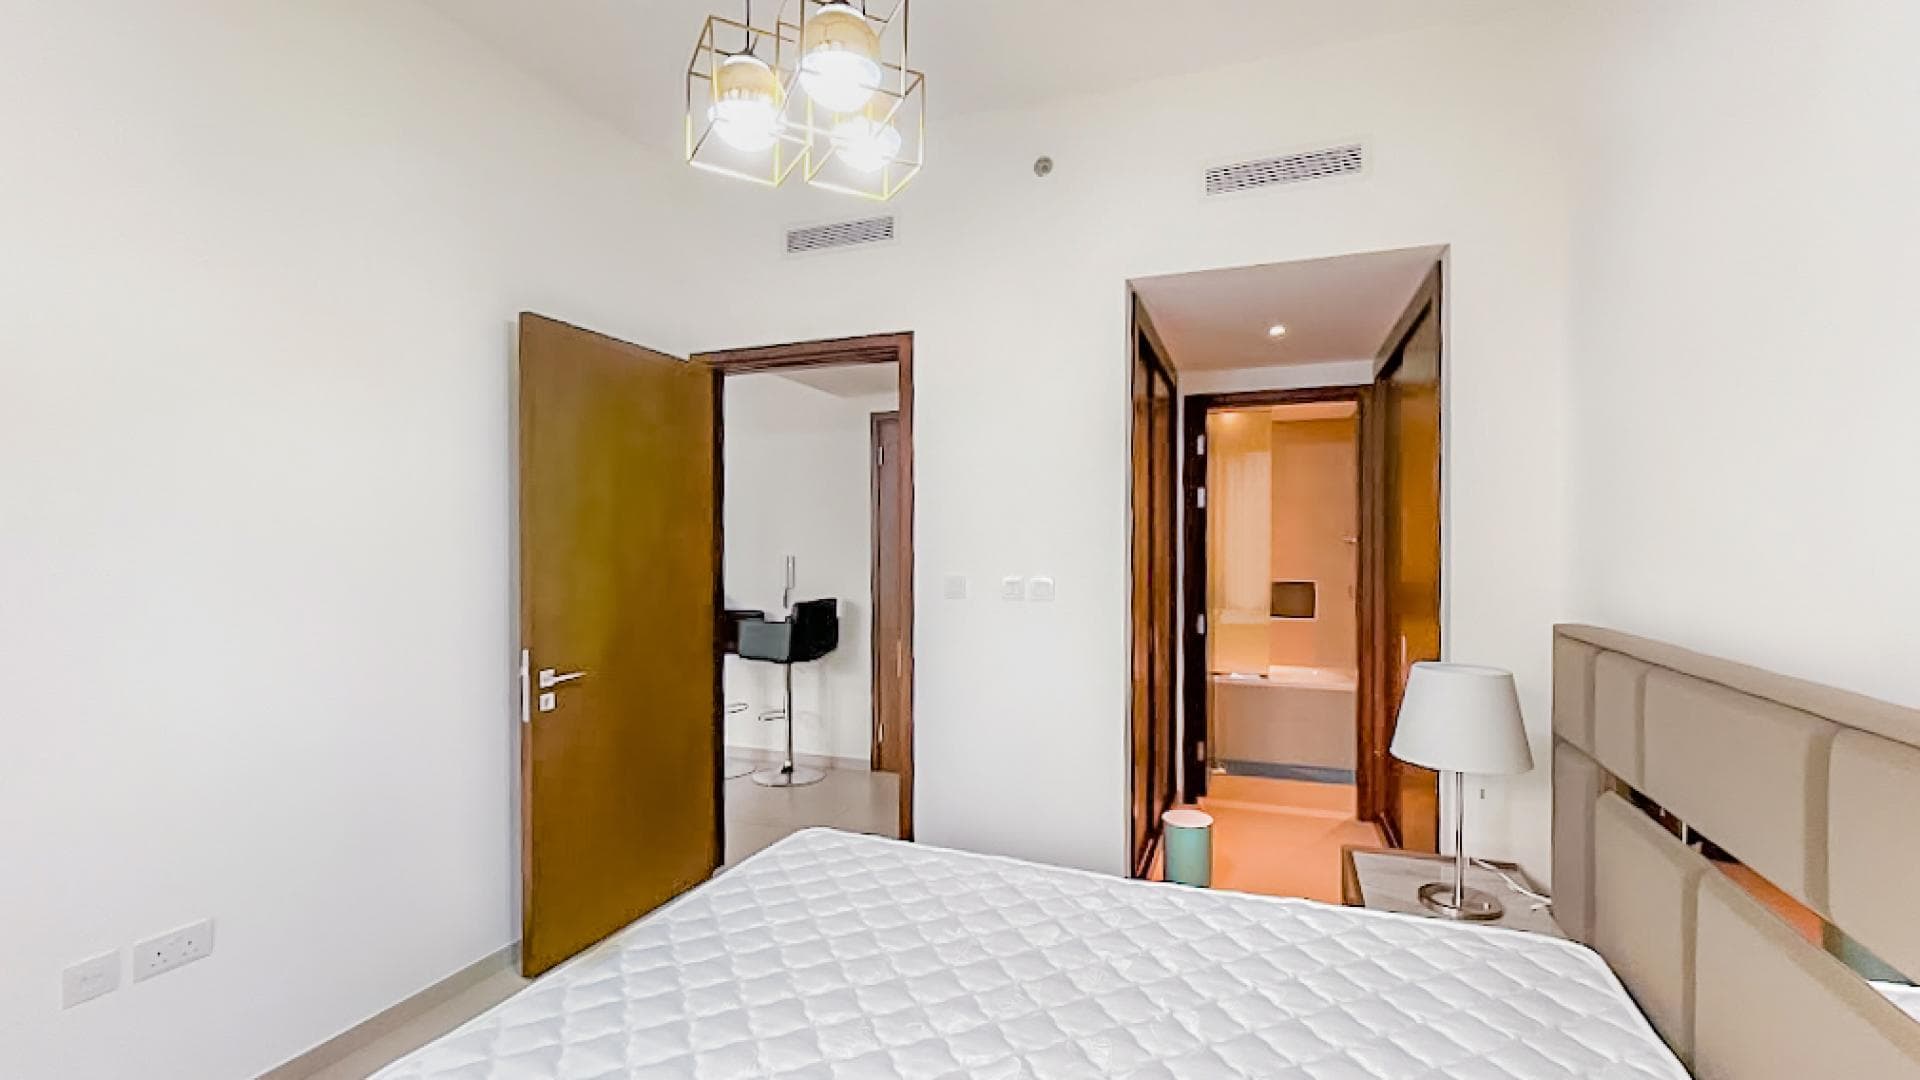 1 Bedroom Apartment For Rent West Phase Iii Lp37026 2a2421defde93c00.jpg